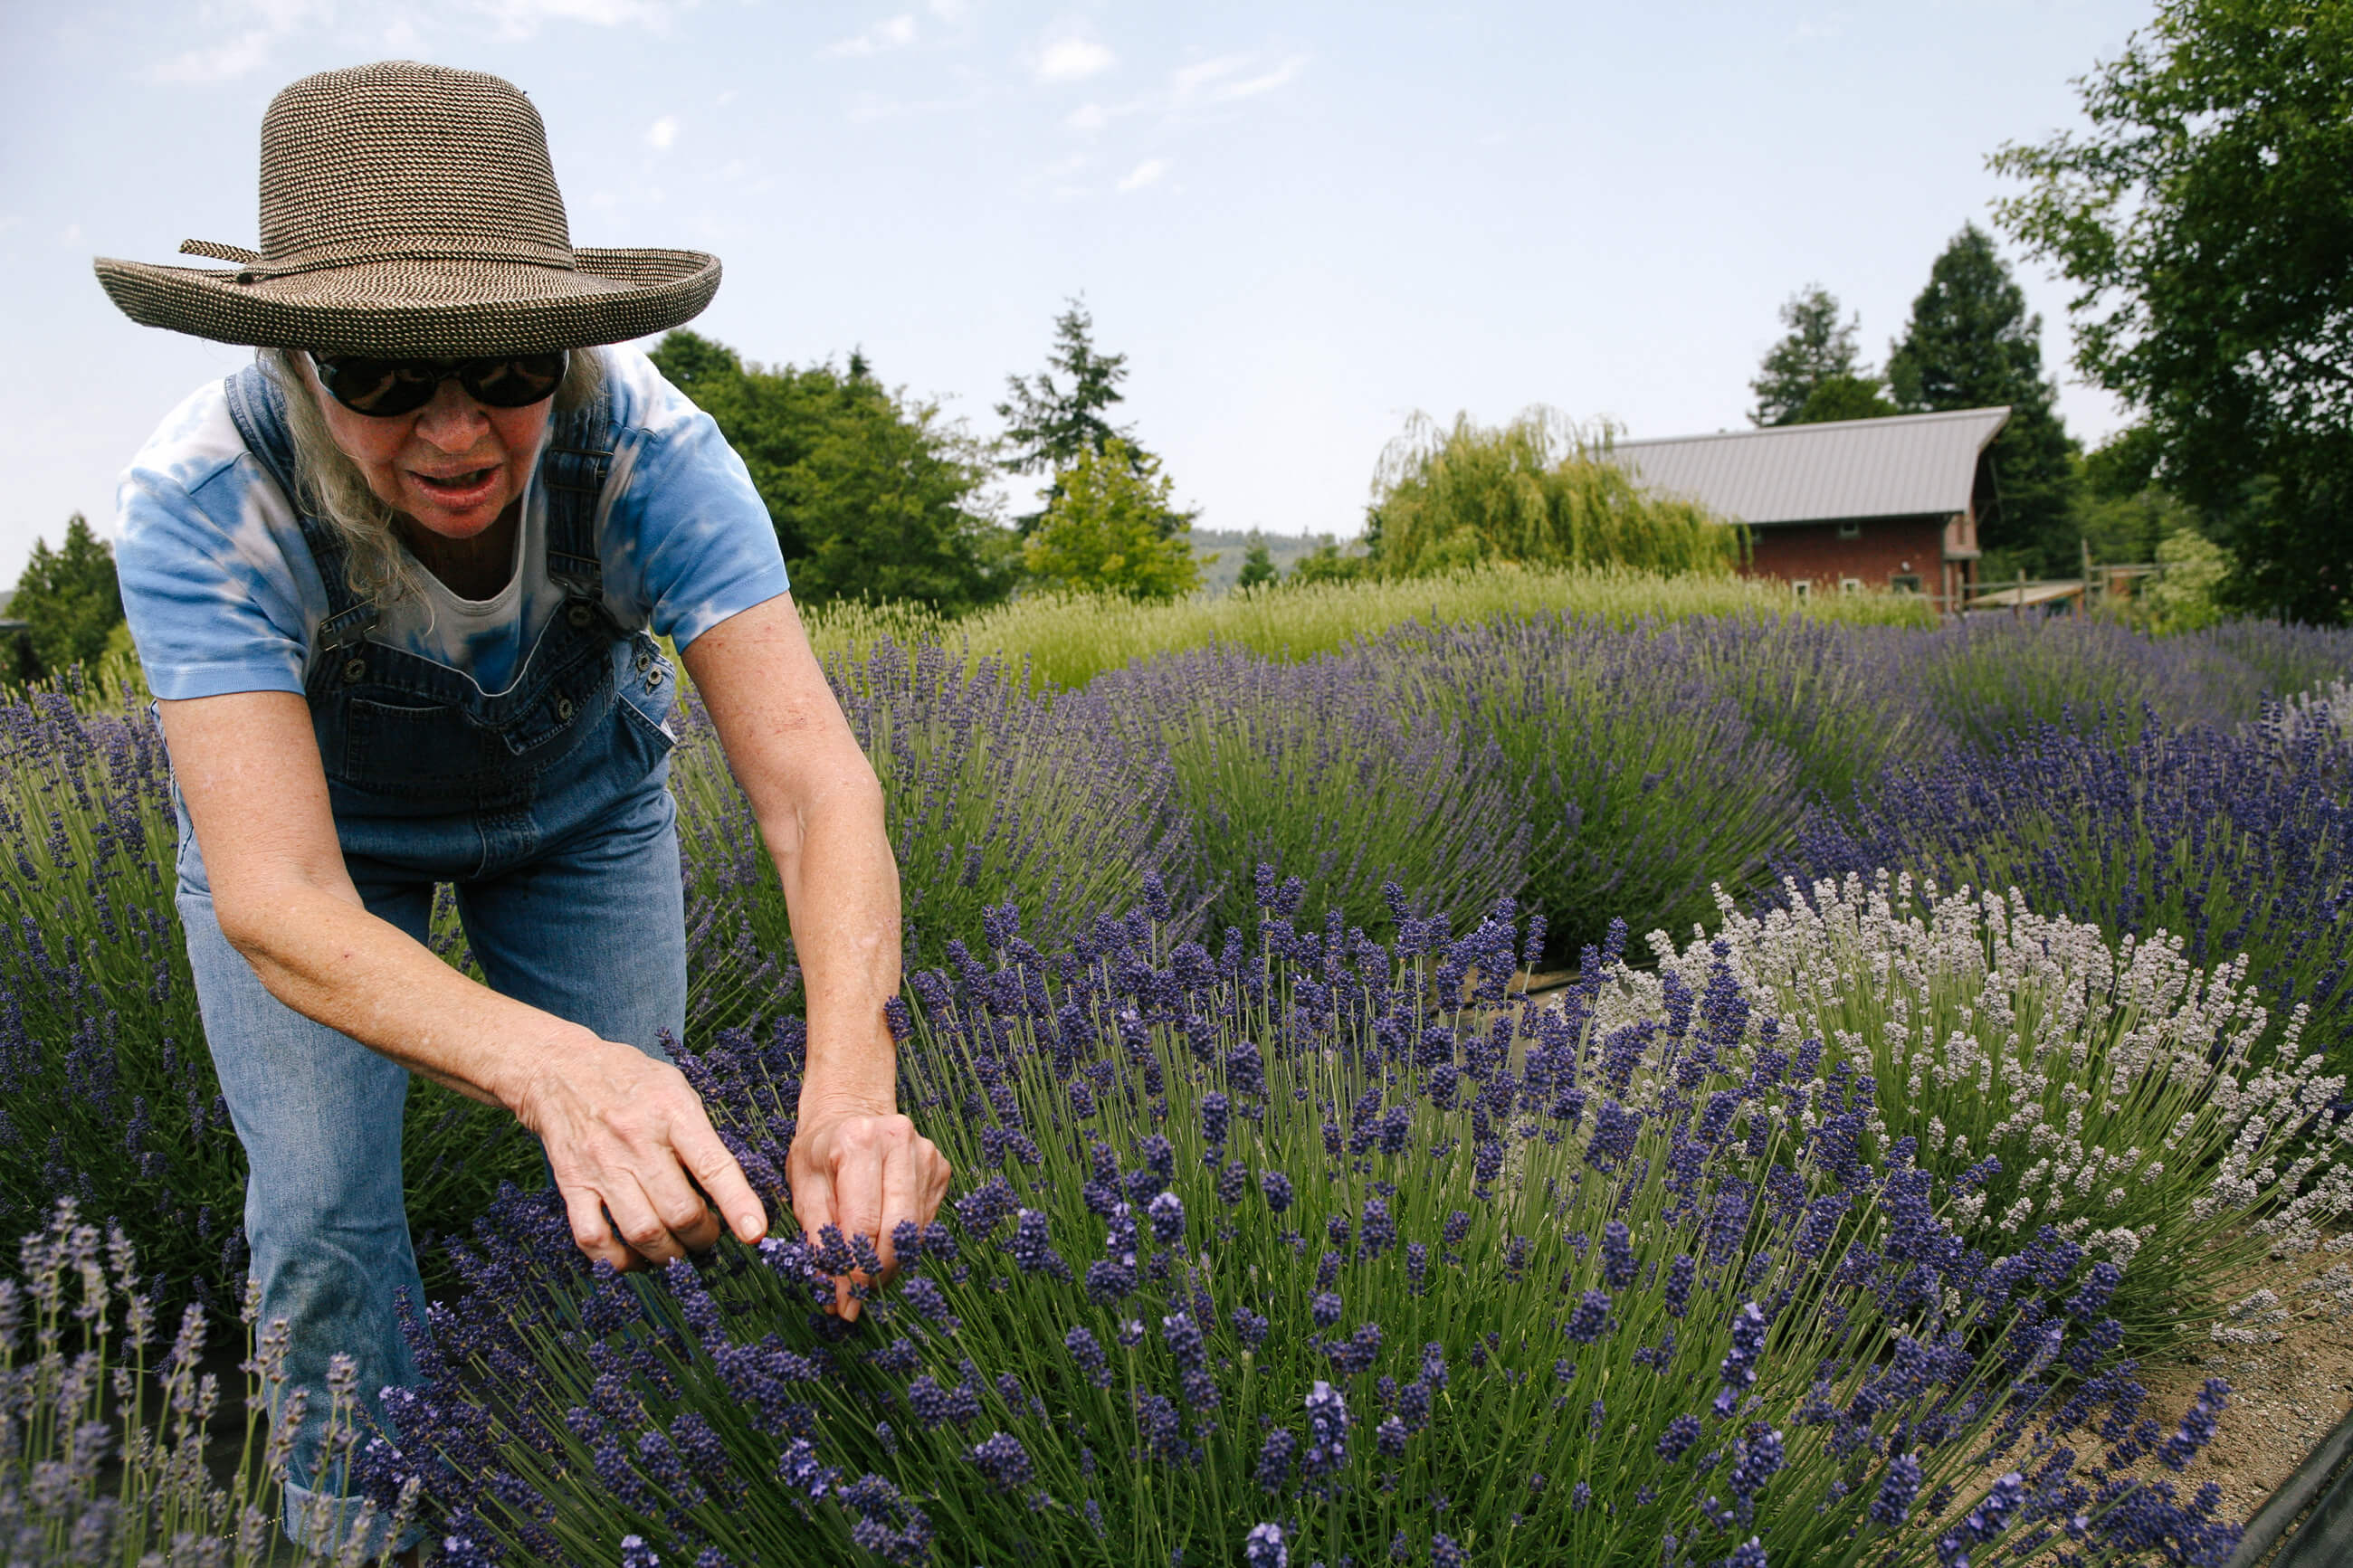 A woman lavender farmer picks some lavender flowers at her lavender farm in Vashon Island Washington